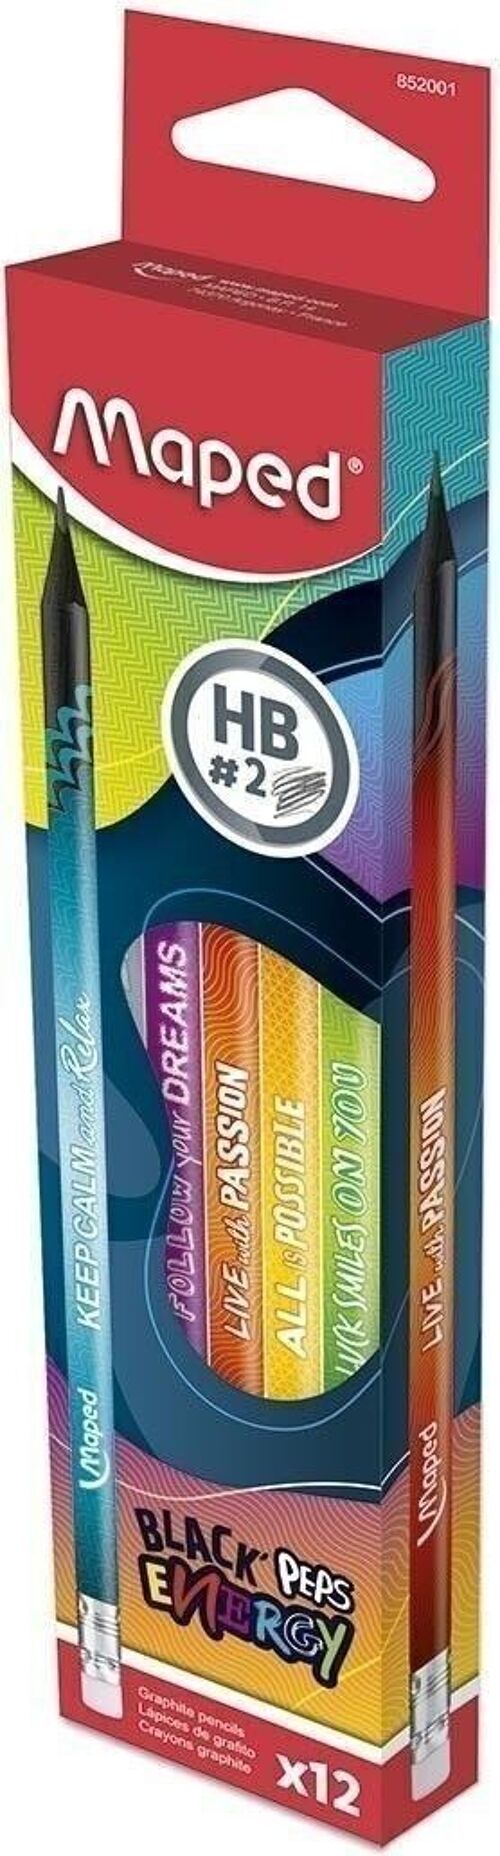 Crayons Graphite embout gomme BLACK'PEPS ENERGY HB x12 en boîte carton